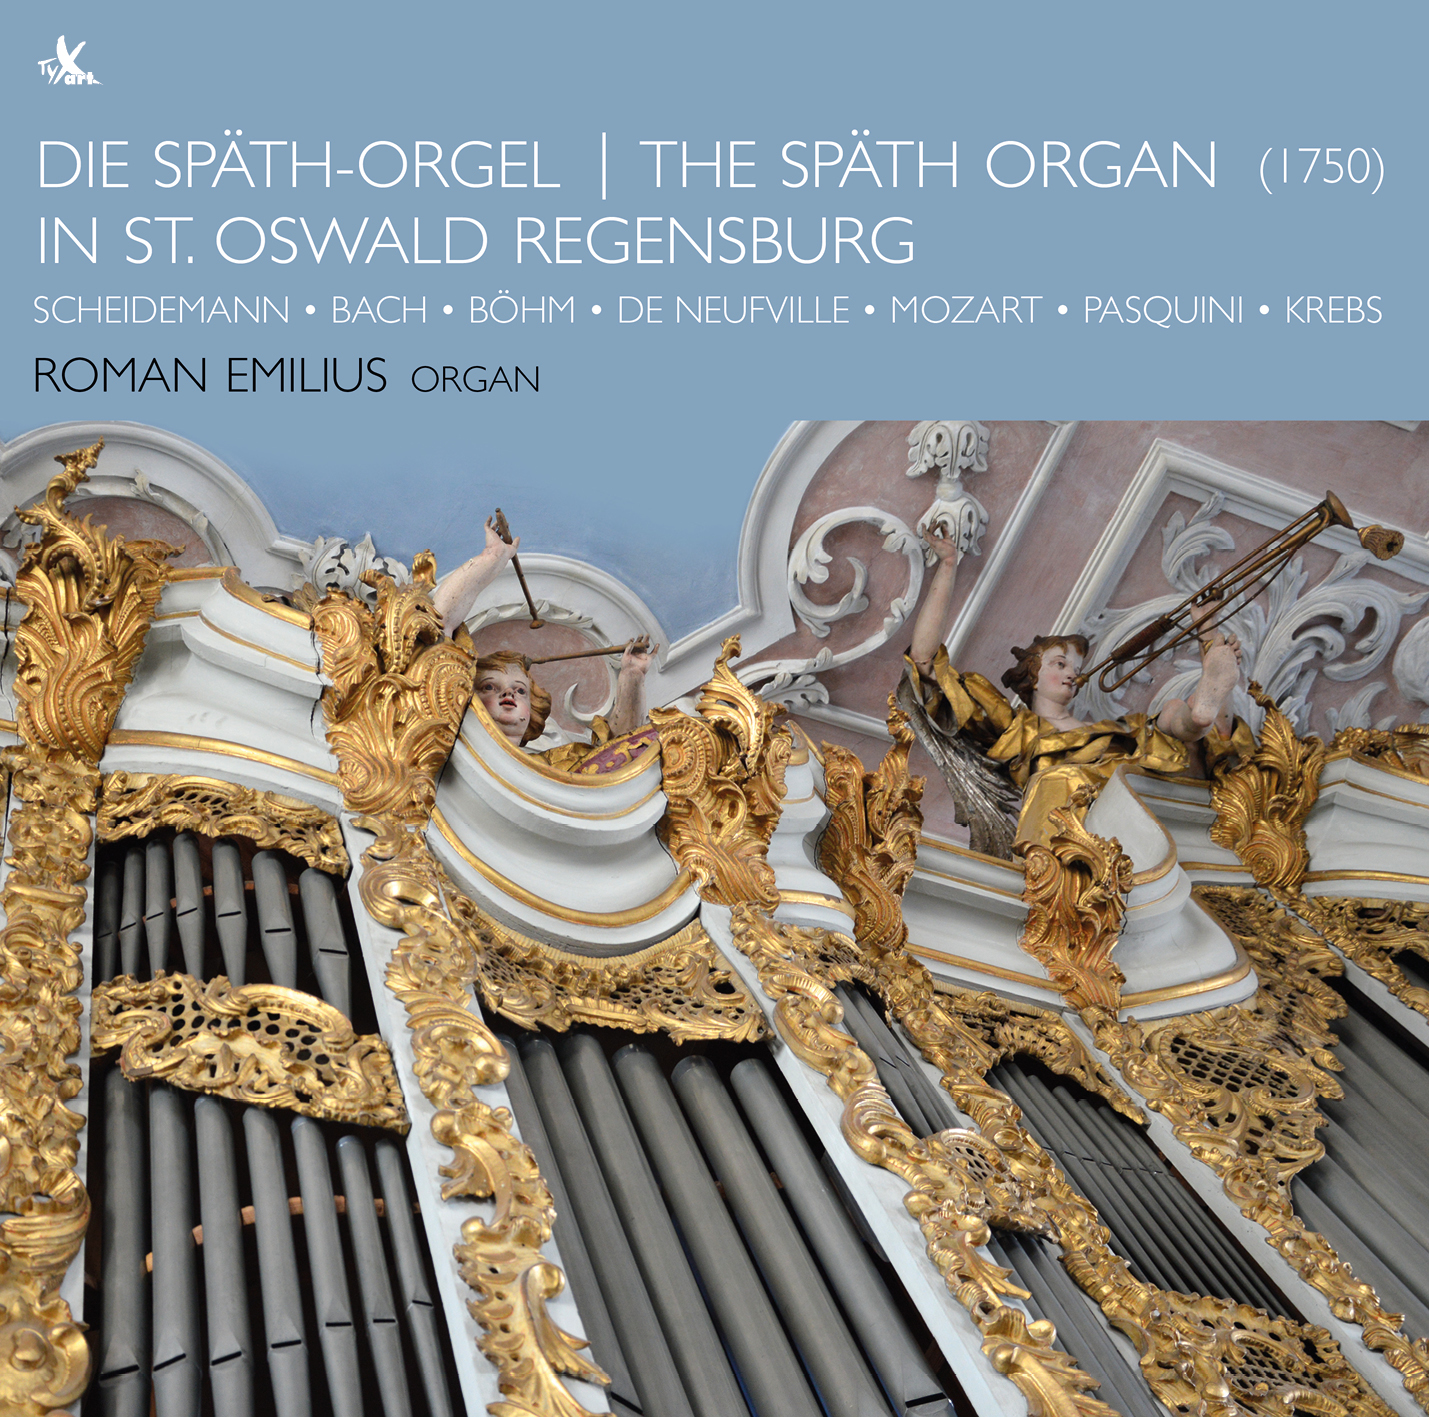 The Späth Organ in St. Oswald Regensburg/Germany